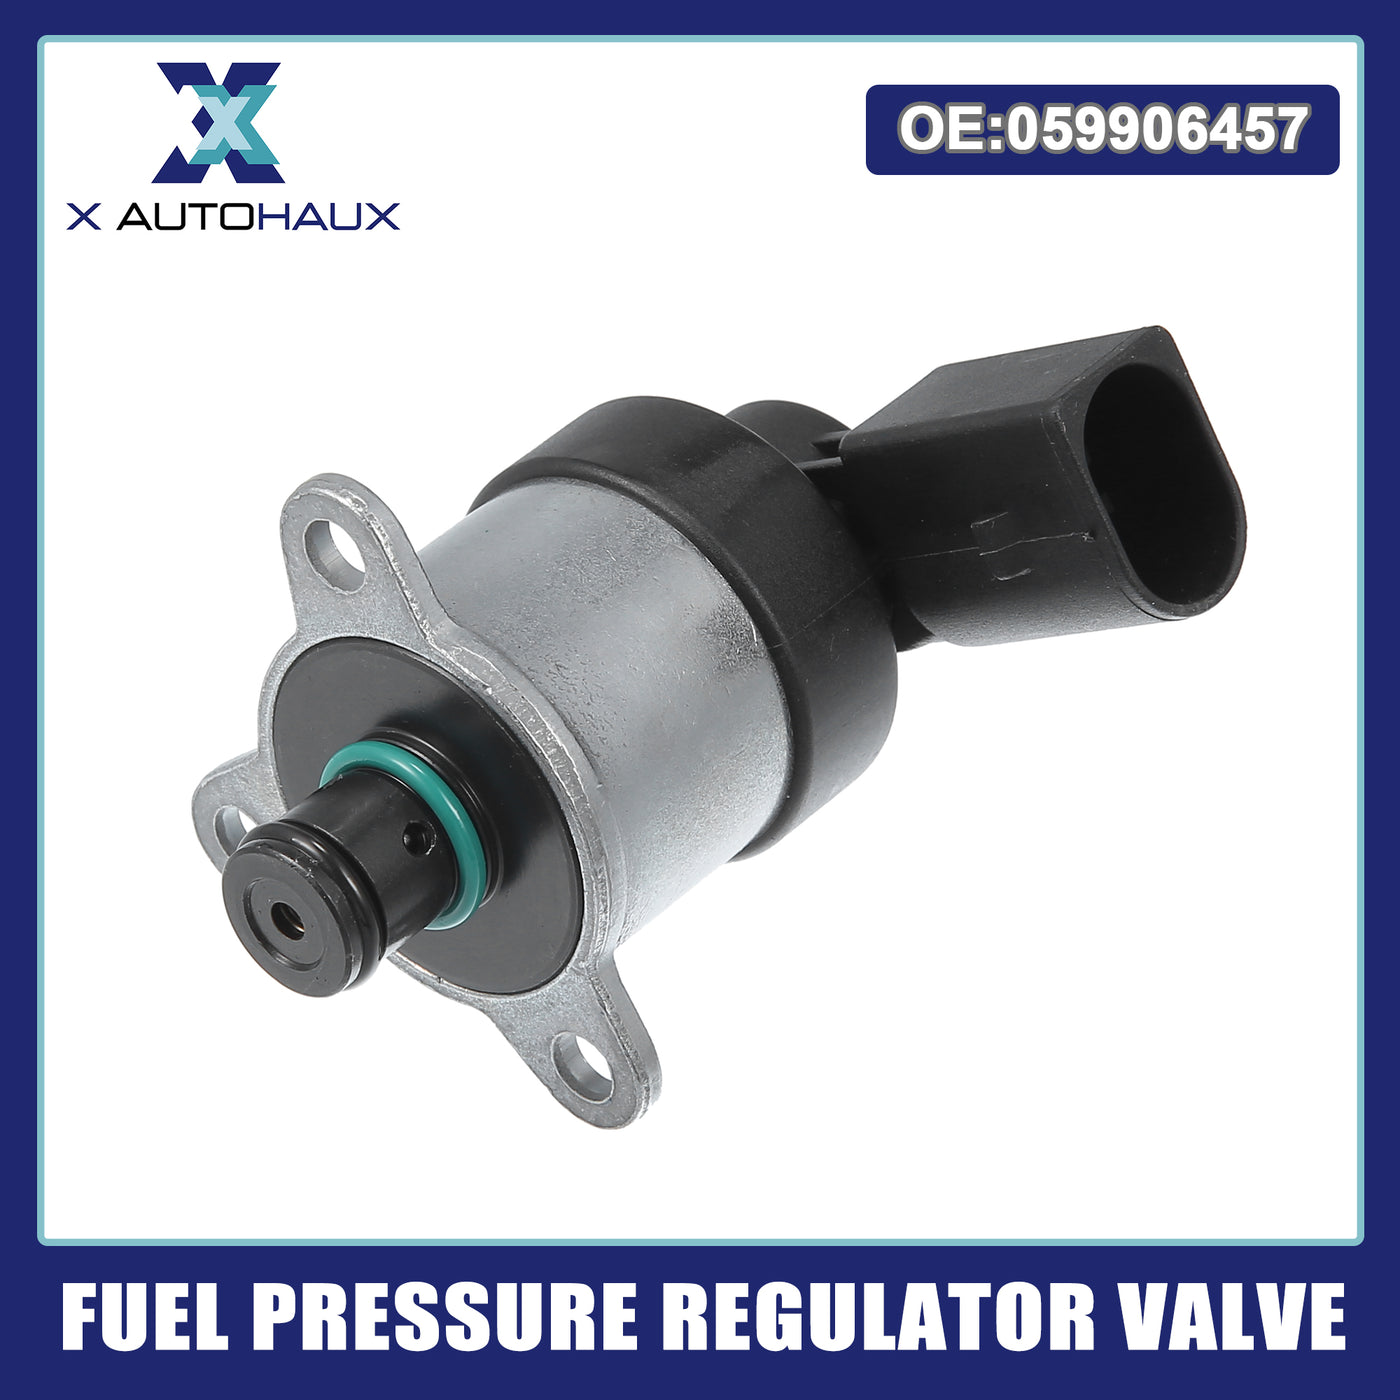 ACROPIX Fuel Pressure Regulator Valve Black Silver Tone Fit for AUDI A4 2004-2009 - Pack of 1